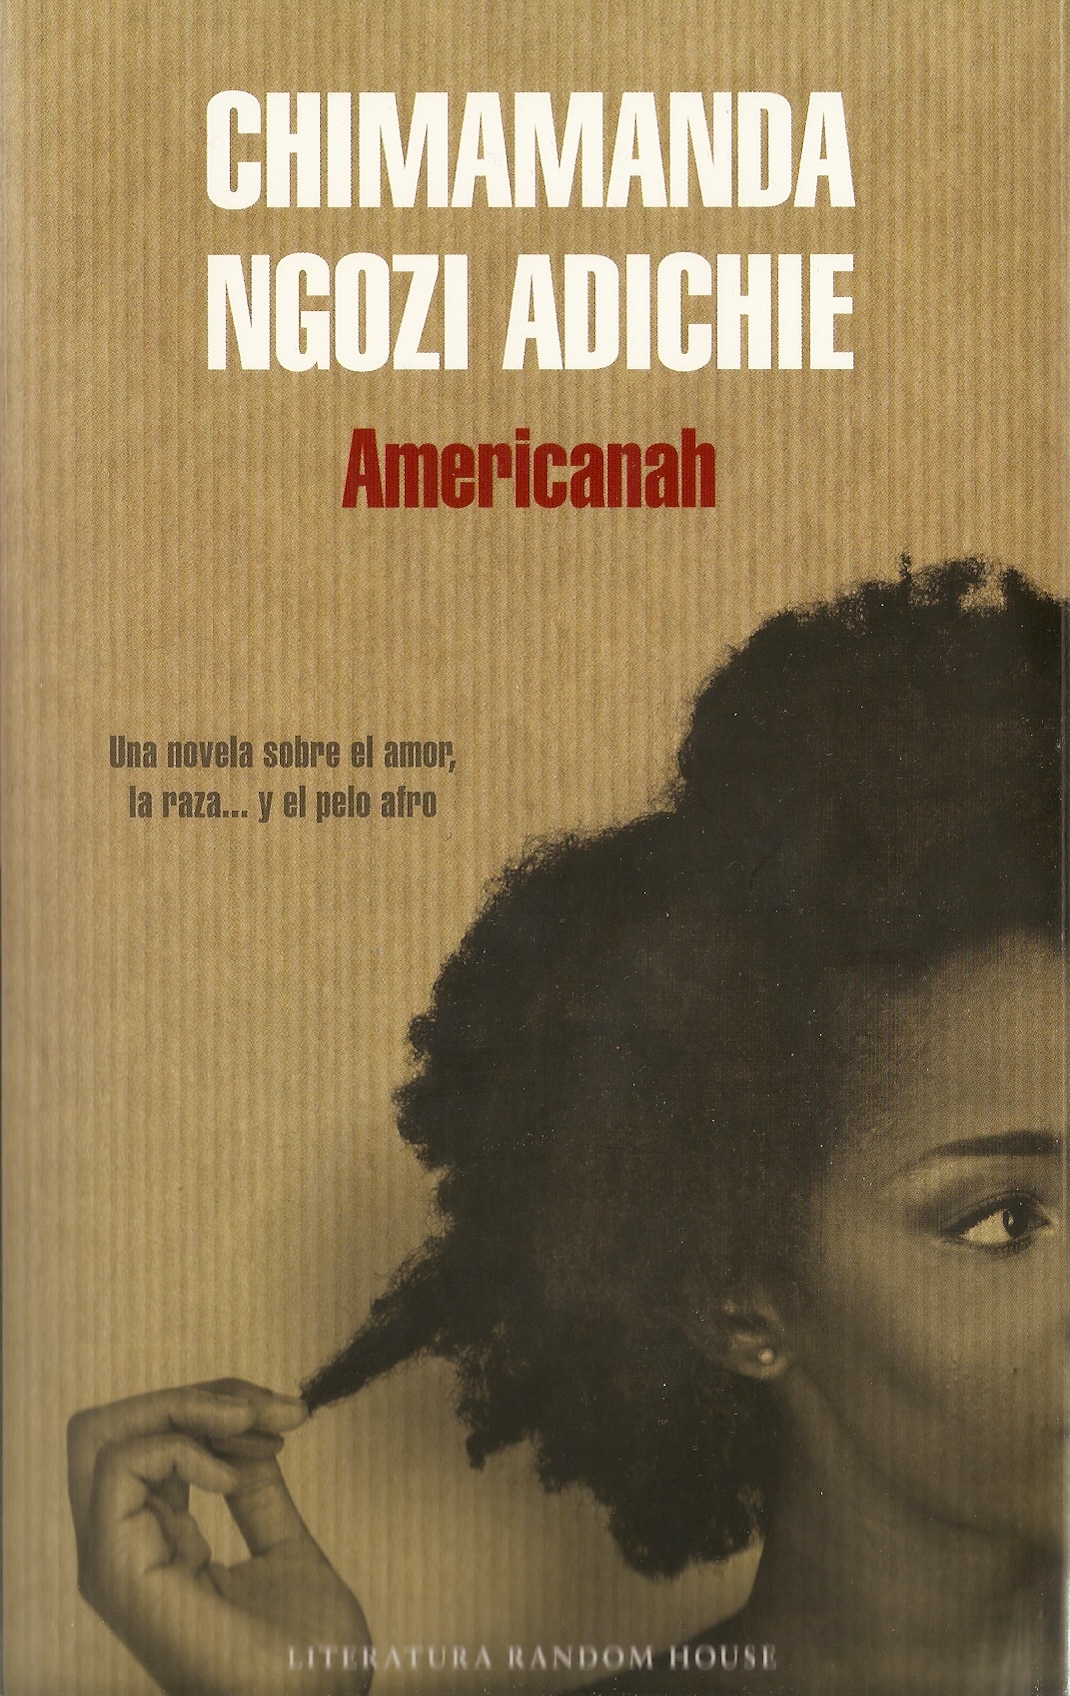 escanear0051 - Americanah Chimamanda Ngozi Adichie, 2013 Penguin Random House [m4b]